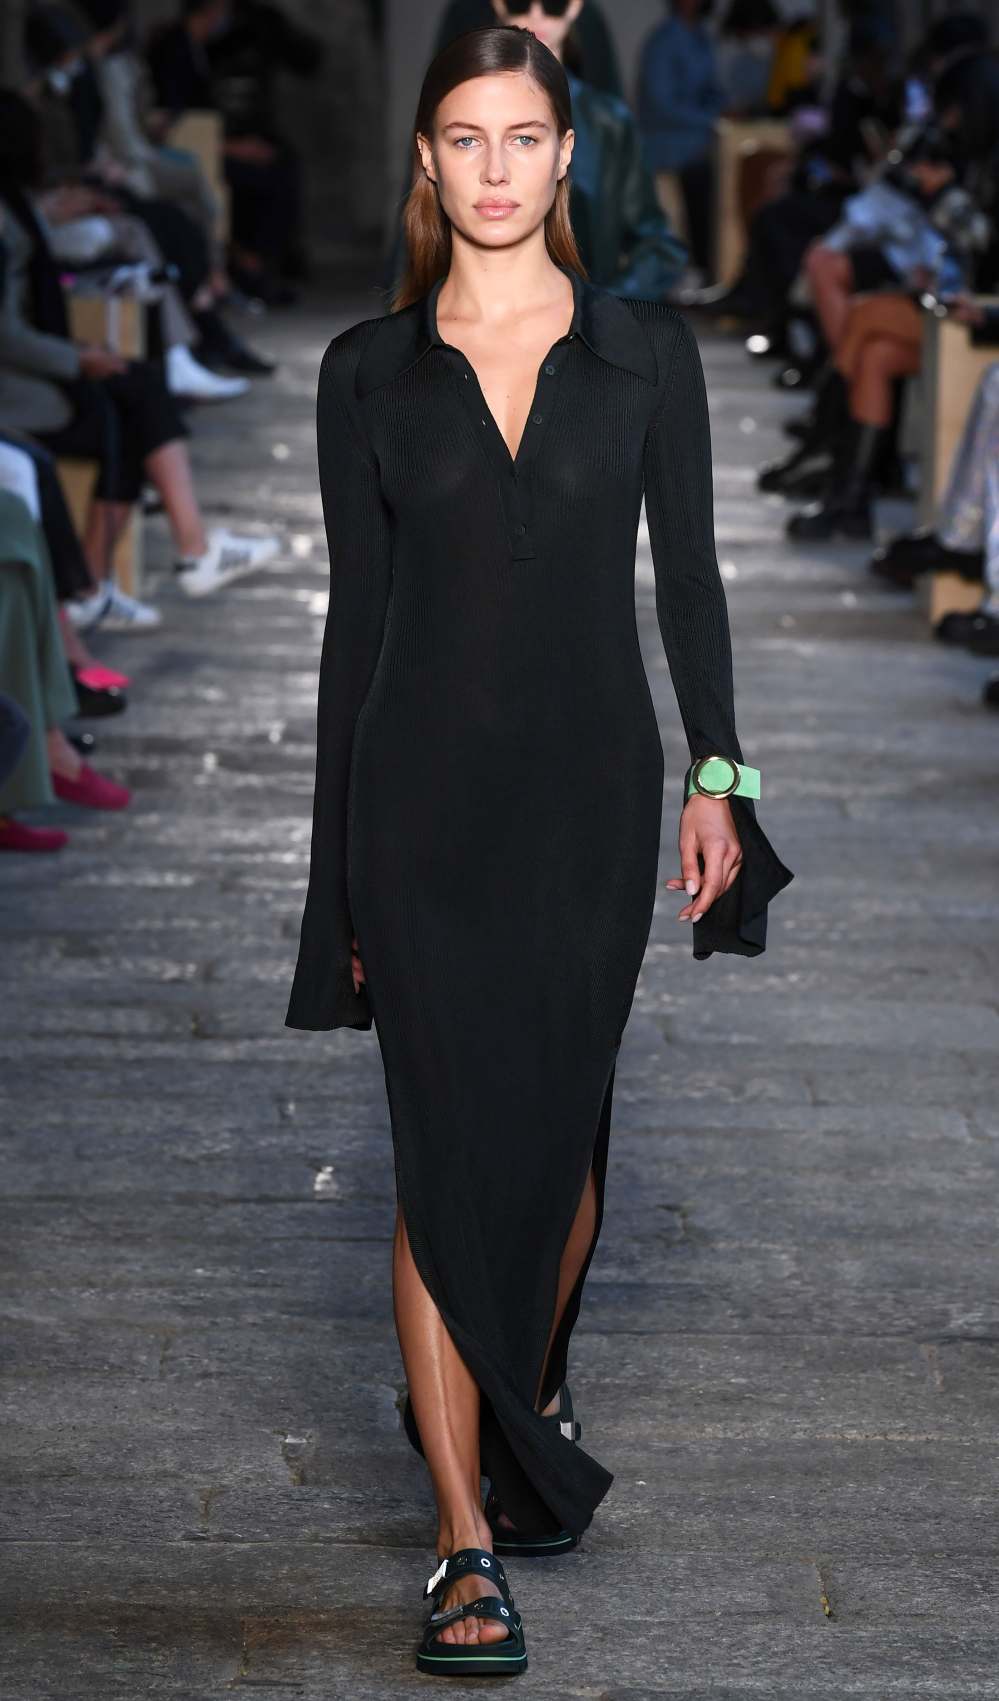 Brad Pitt’s Girlfriend Nicole Poturalski Hits the Runway at Milan Fashion Week